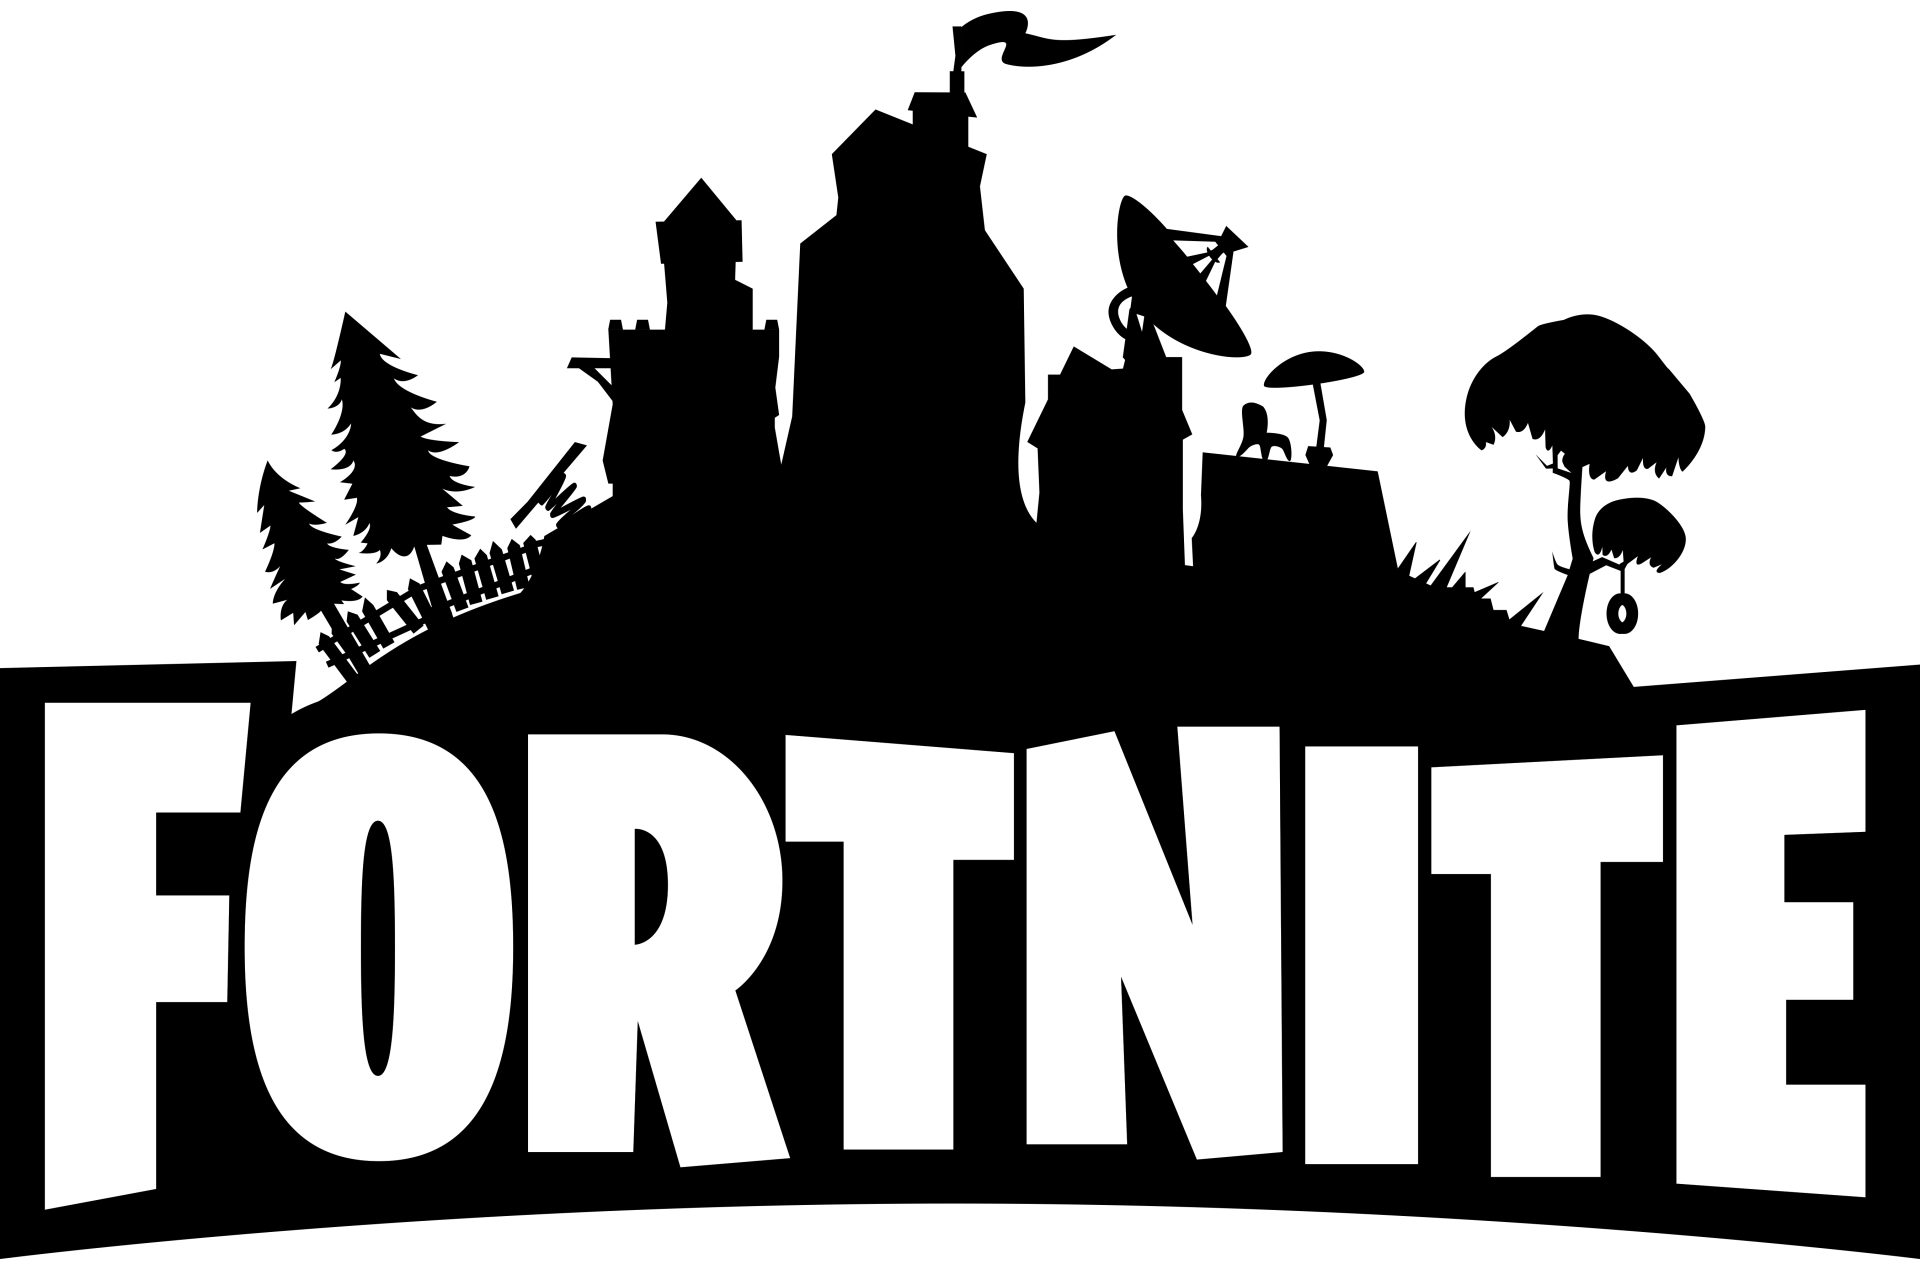 Fortnite Logo Black and White PNG Image - PurePNG | Free transparent